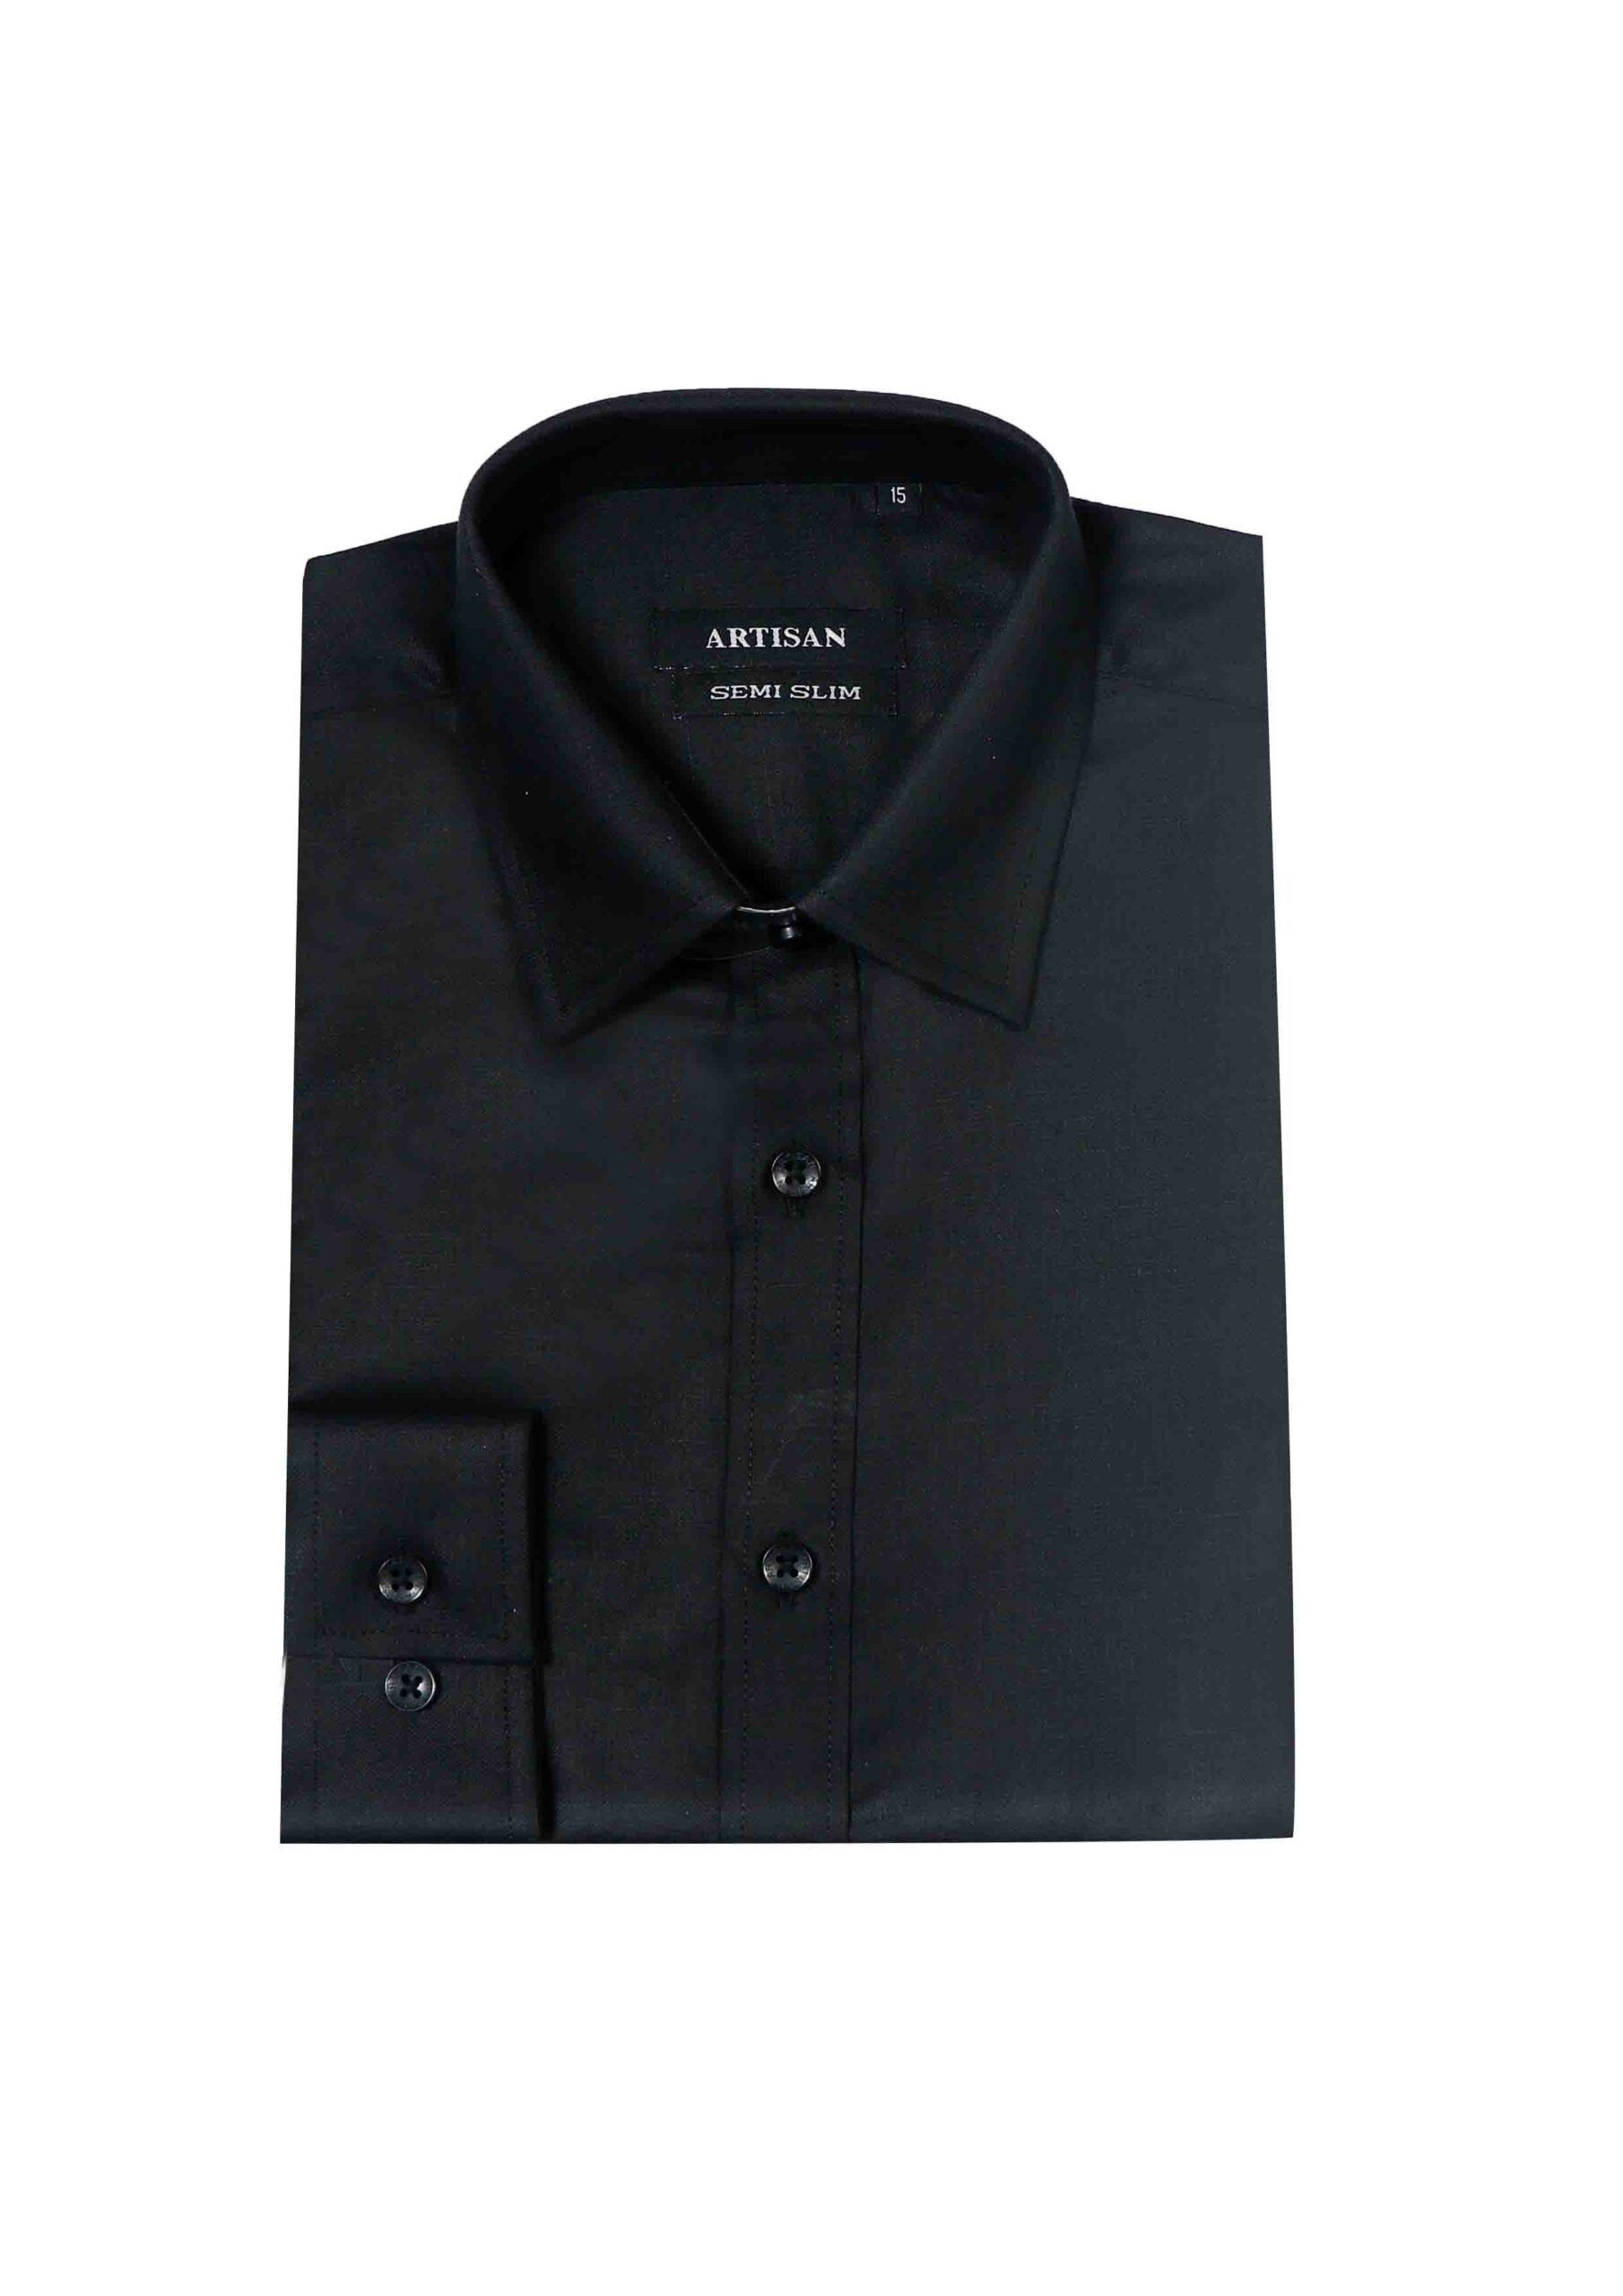 Men’s Formal Shirt - Artisan Outfitters Ltd